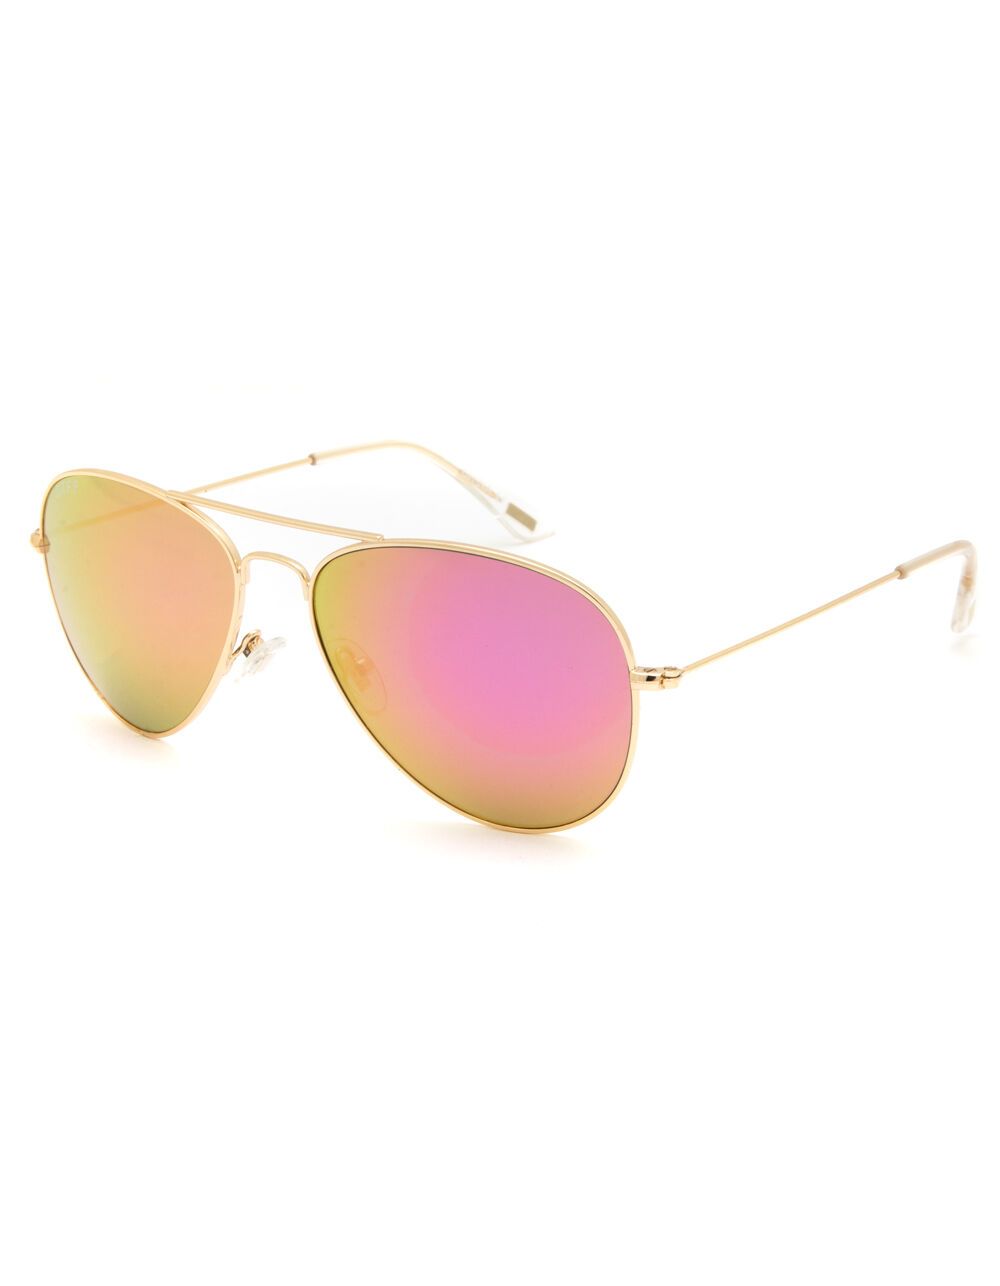 DIFF EYEWEAR Cruz Aviator Gold & Pink Mirror Sunglasses | Tillys